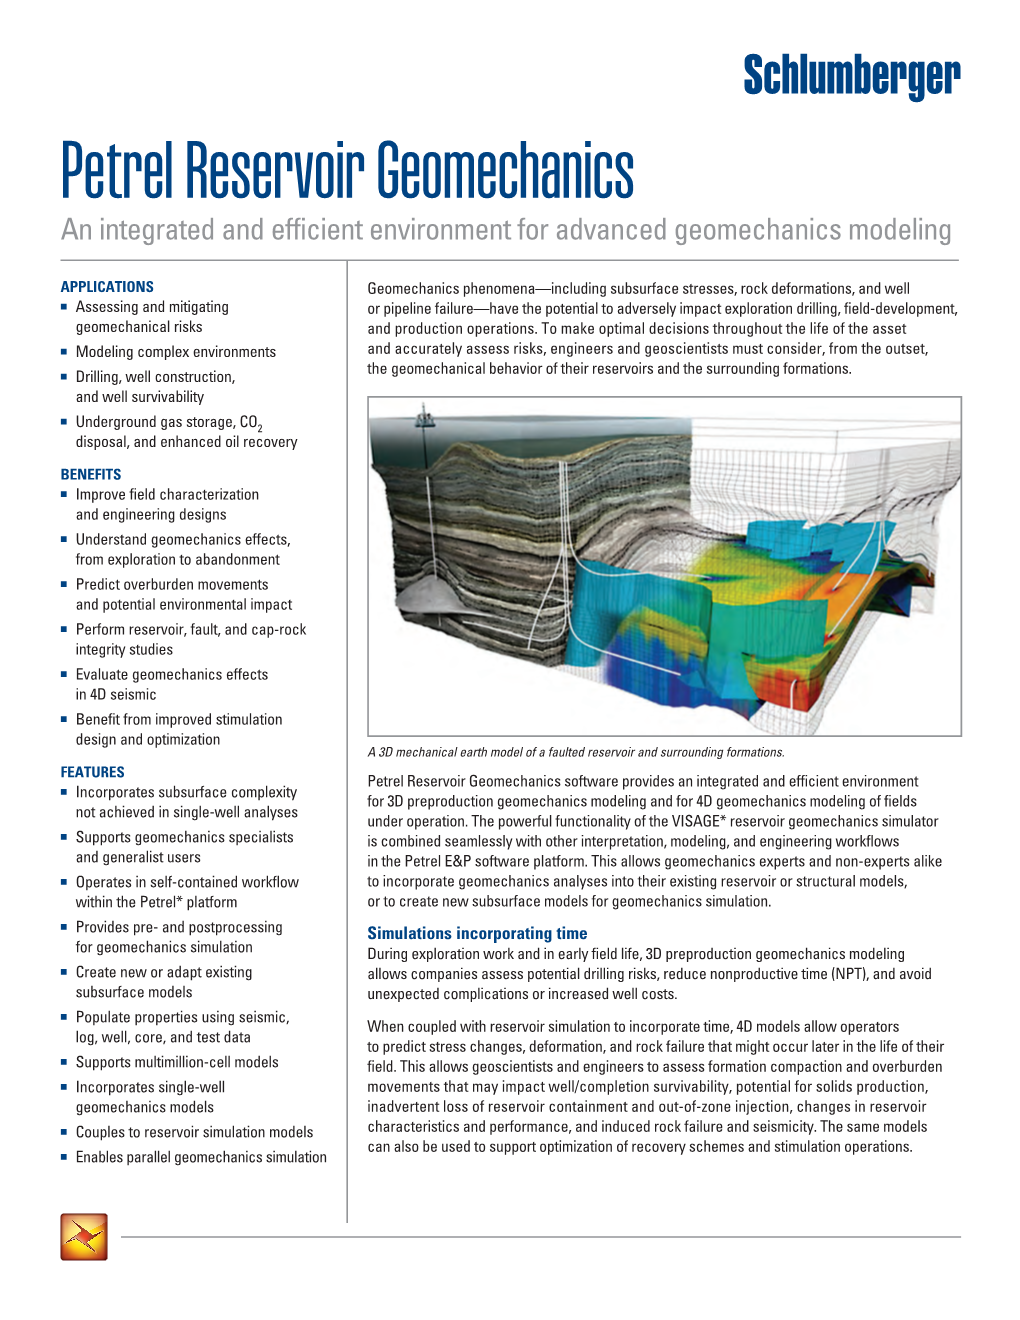 Petrel Reservoir Geomechanics an Integrated and Efficient Environment for Advanced Geomechanics Modeling